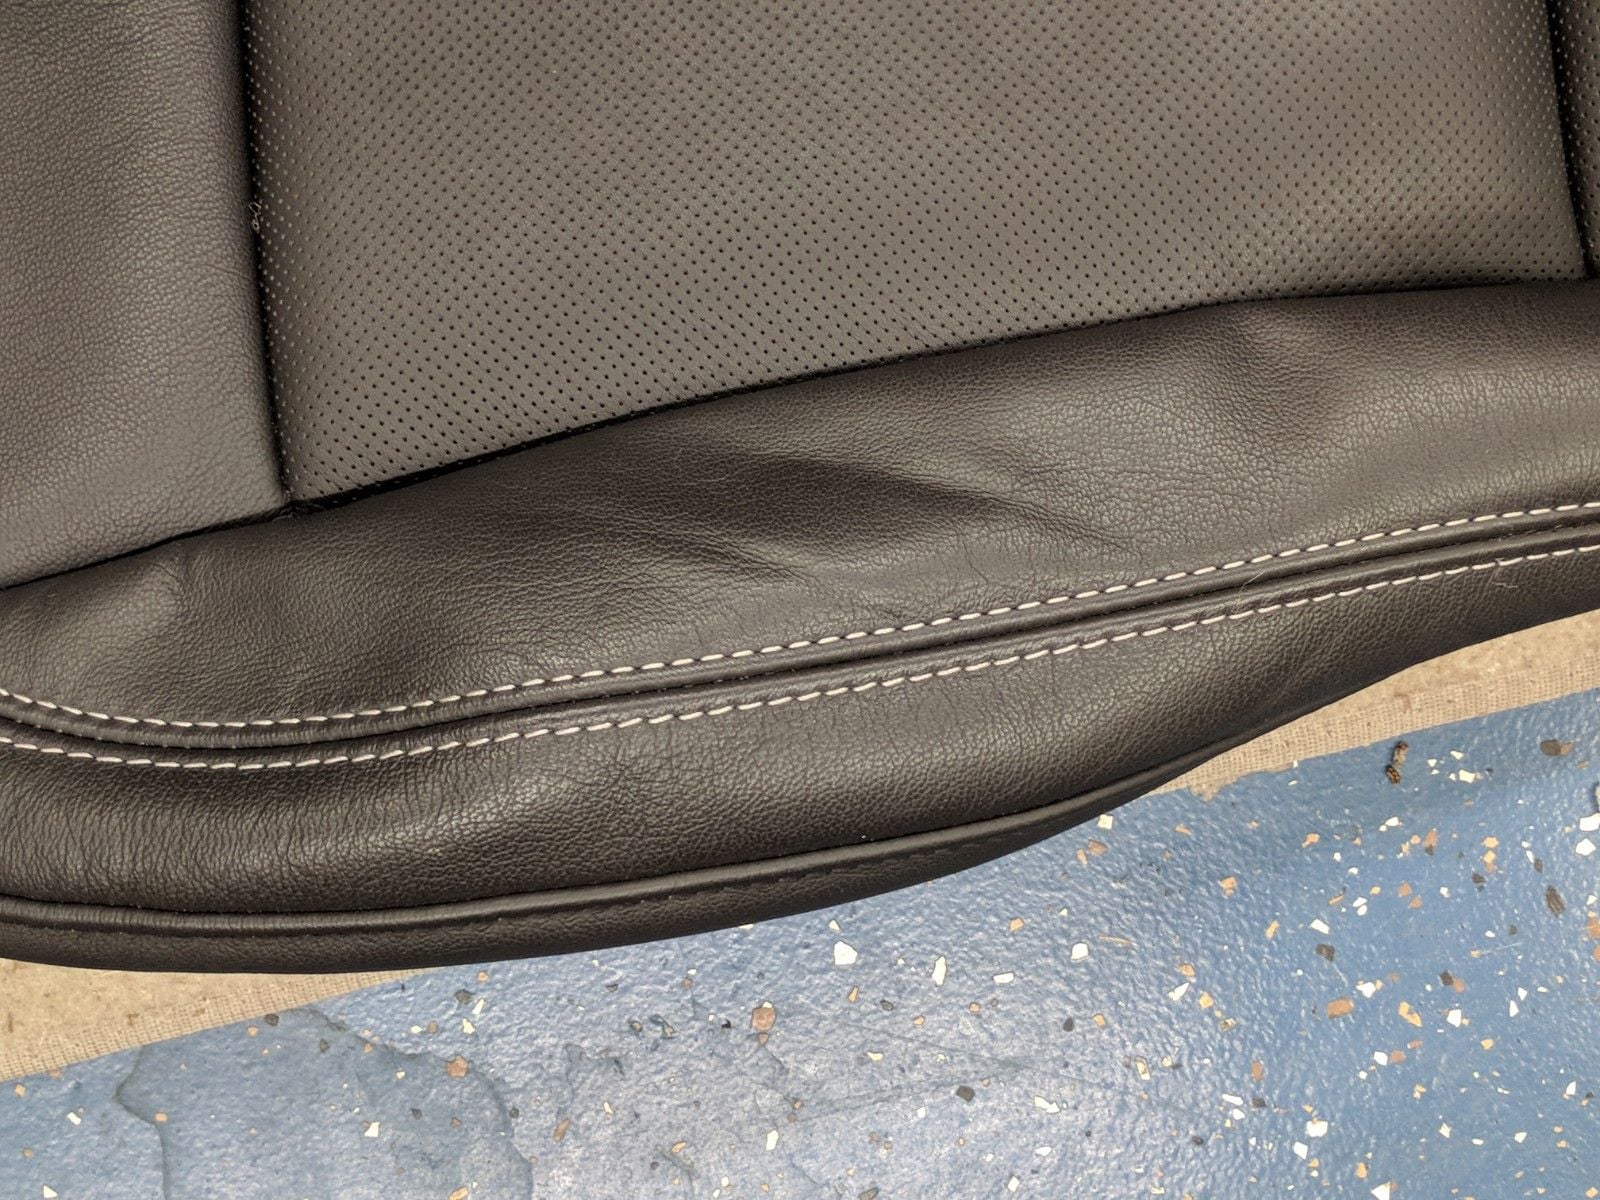 FS (For Sale) 3LT Nappa leather interior parts - CorvetteForum ...